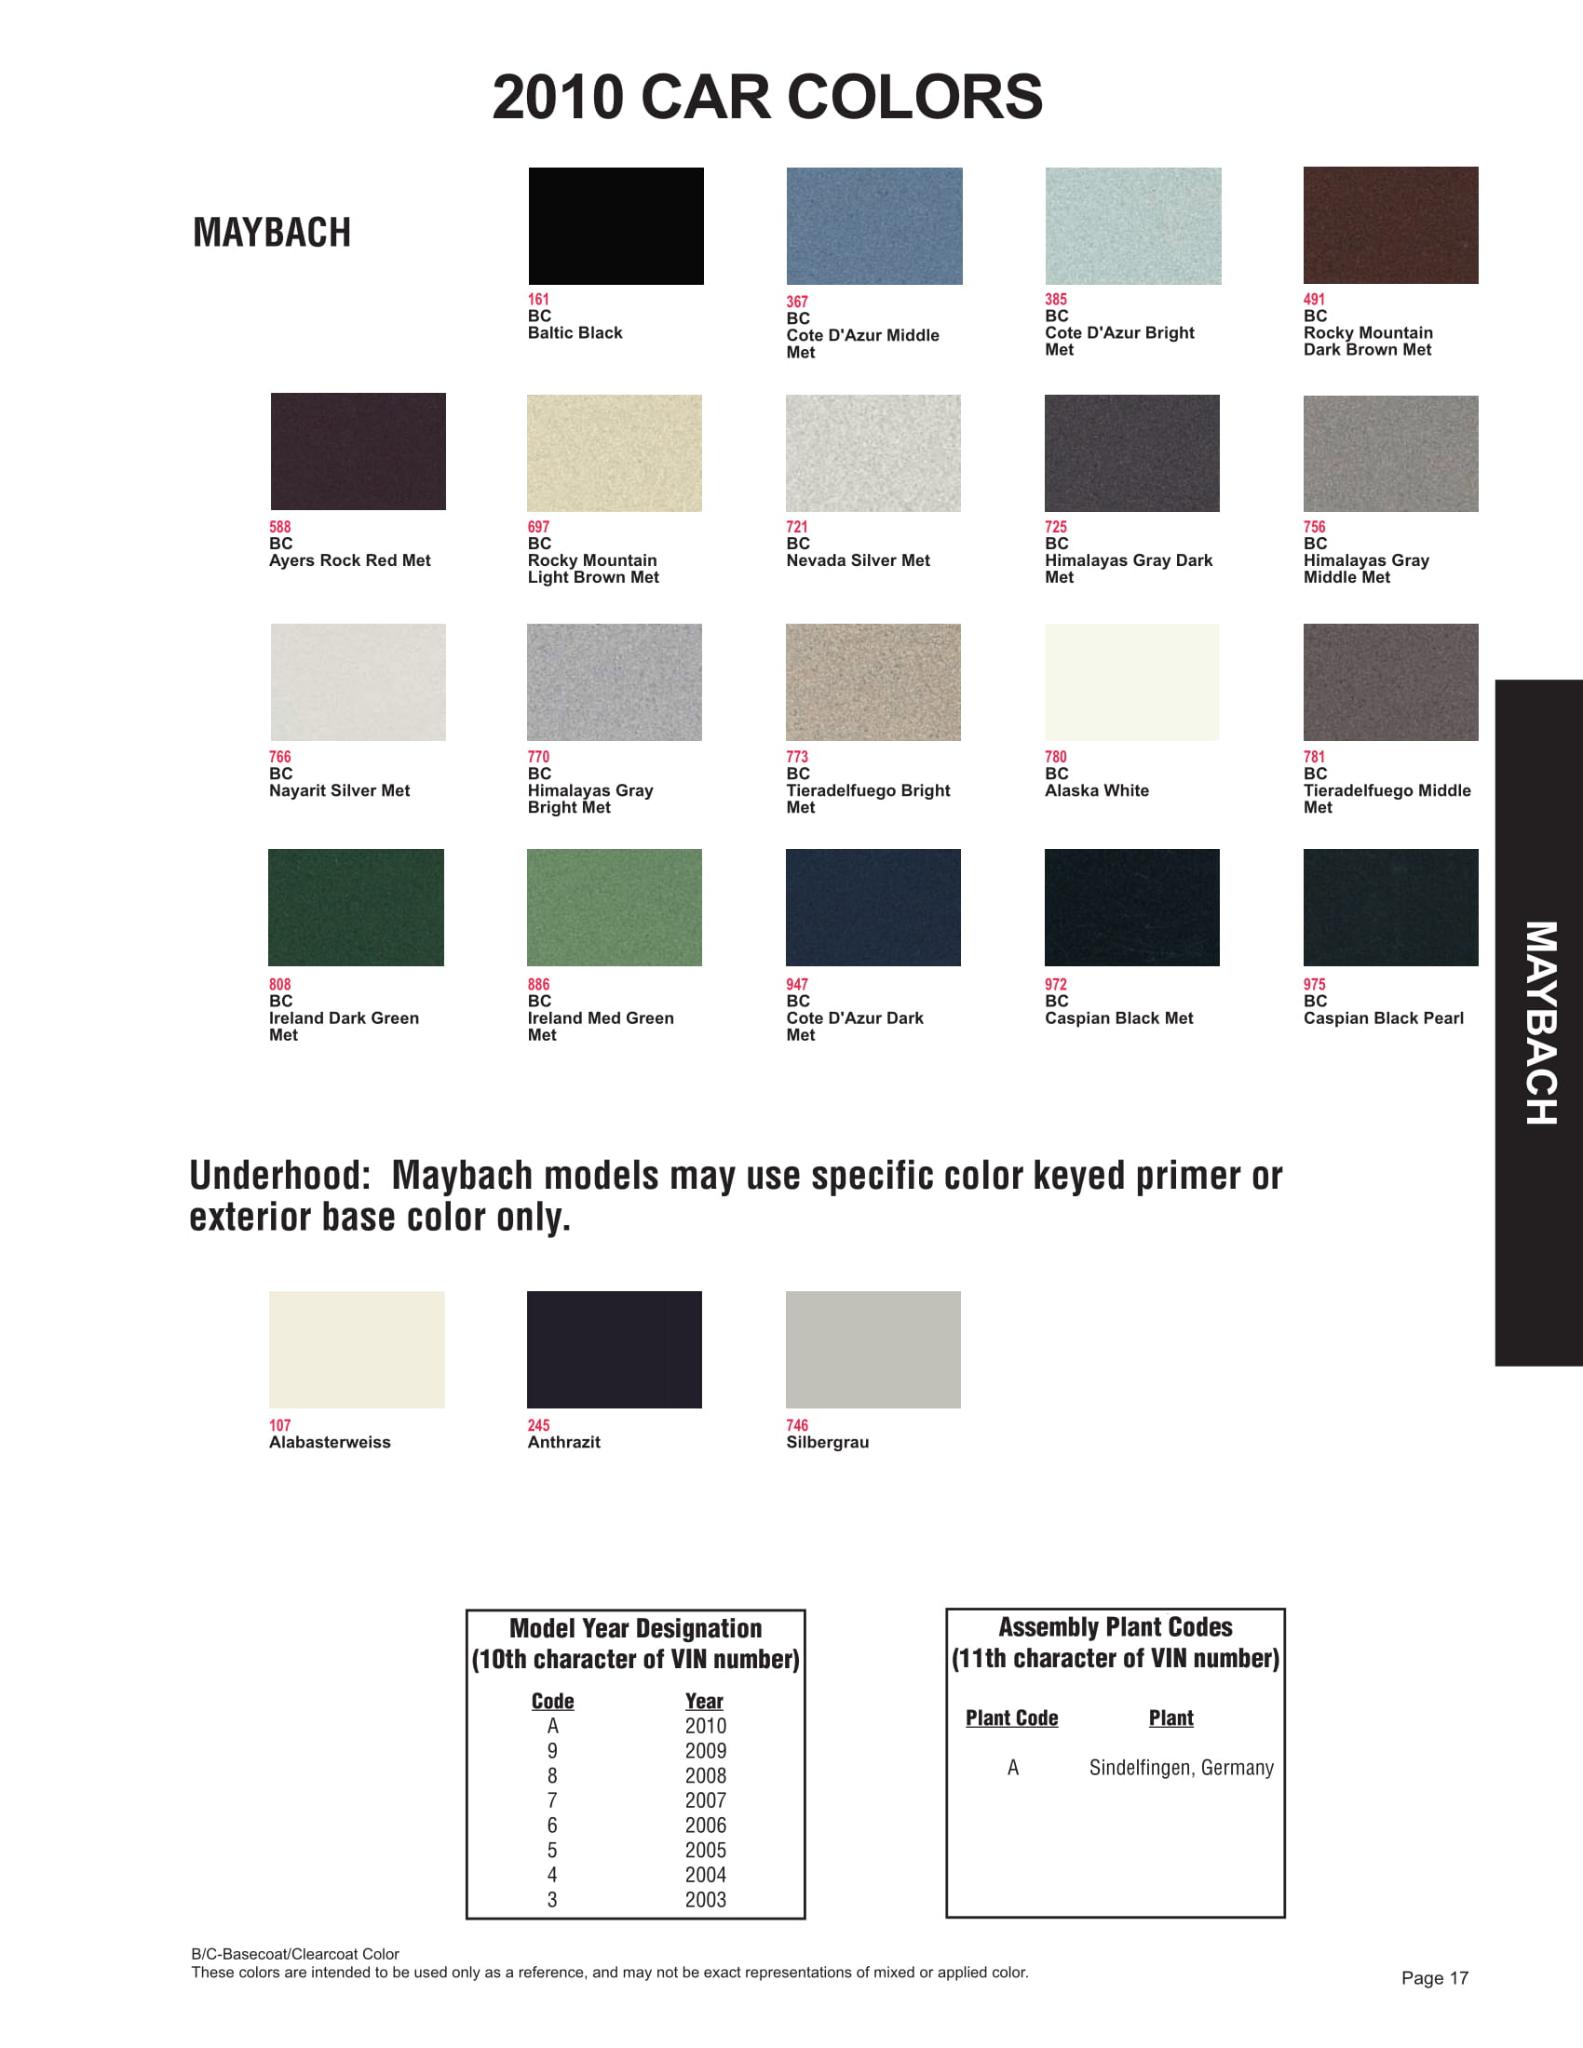 Maybach Paint Codes, Colors